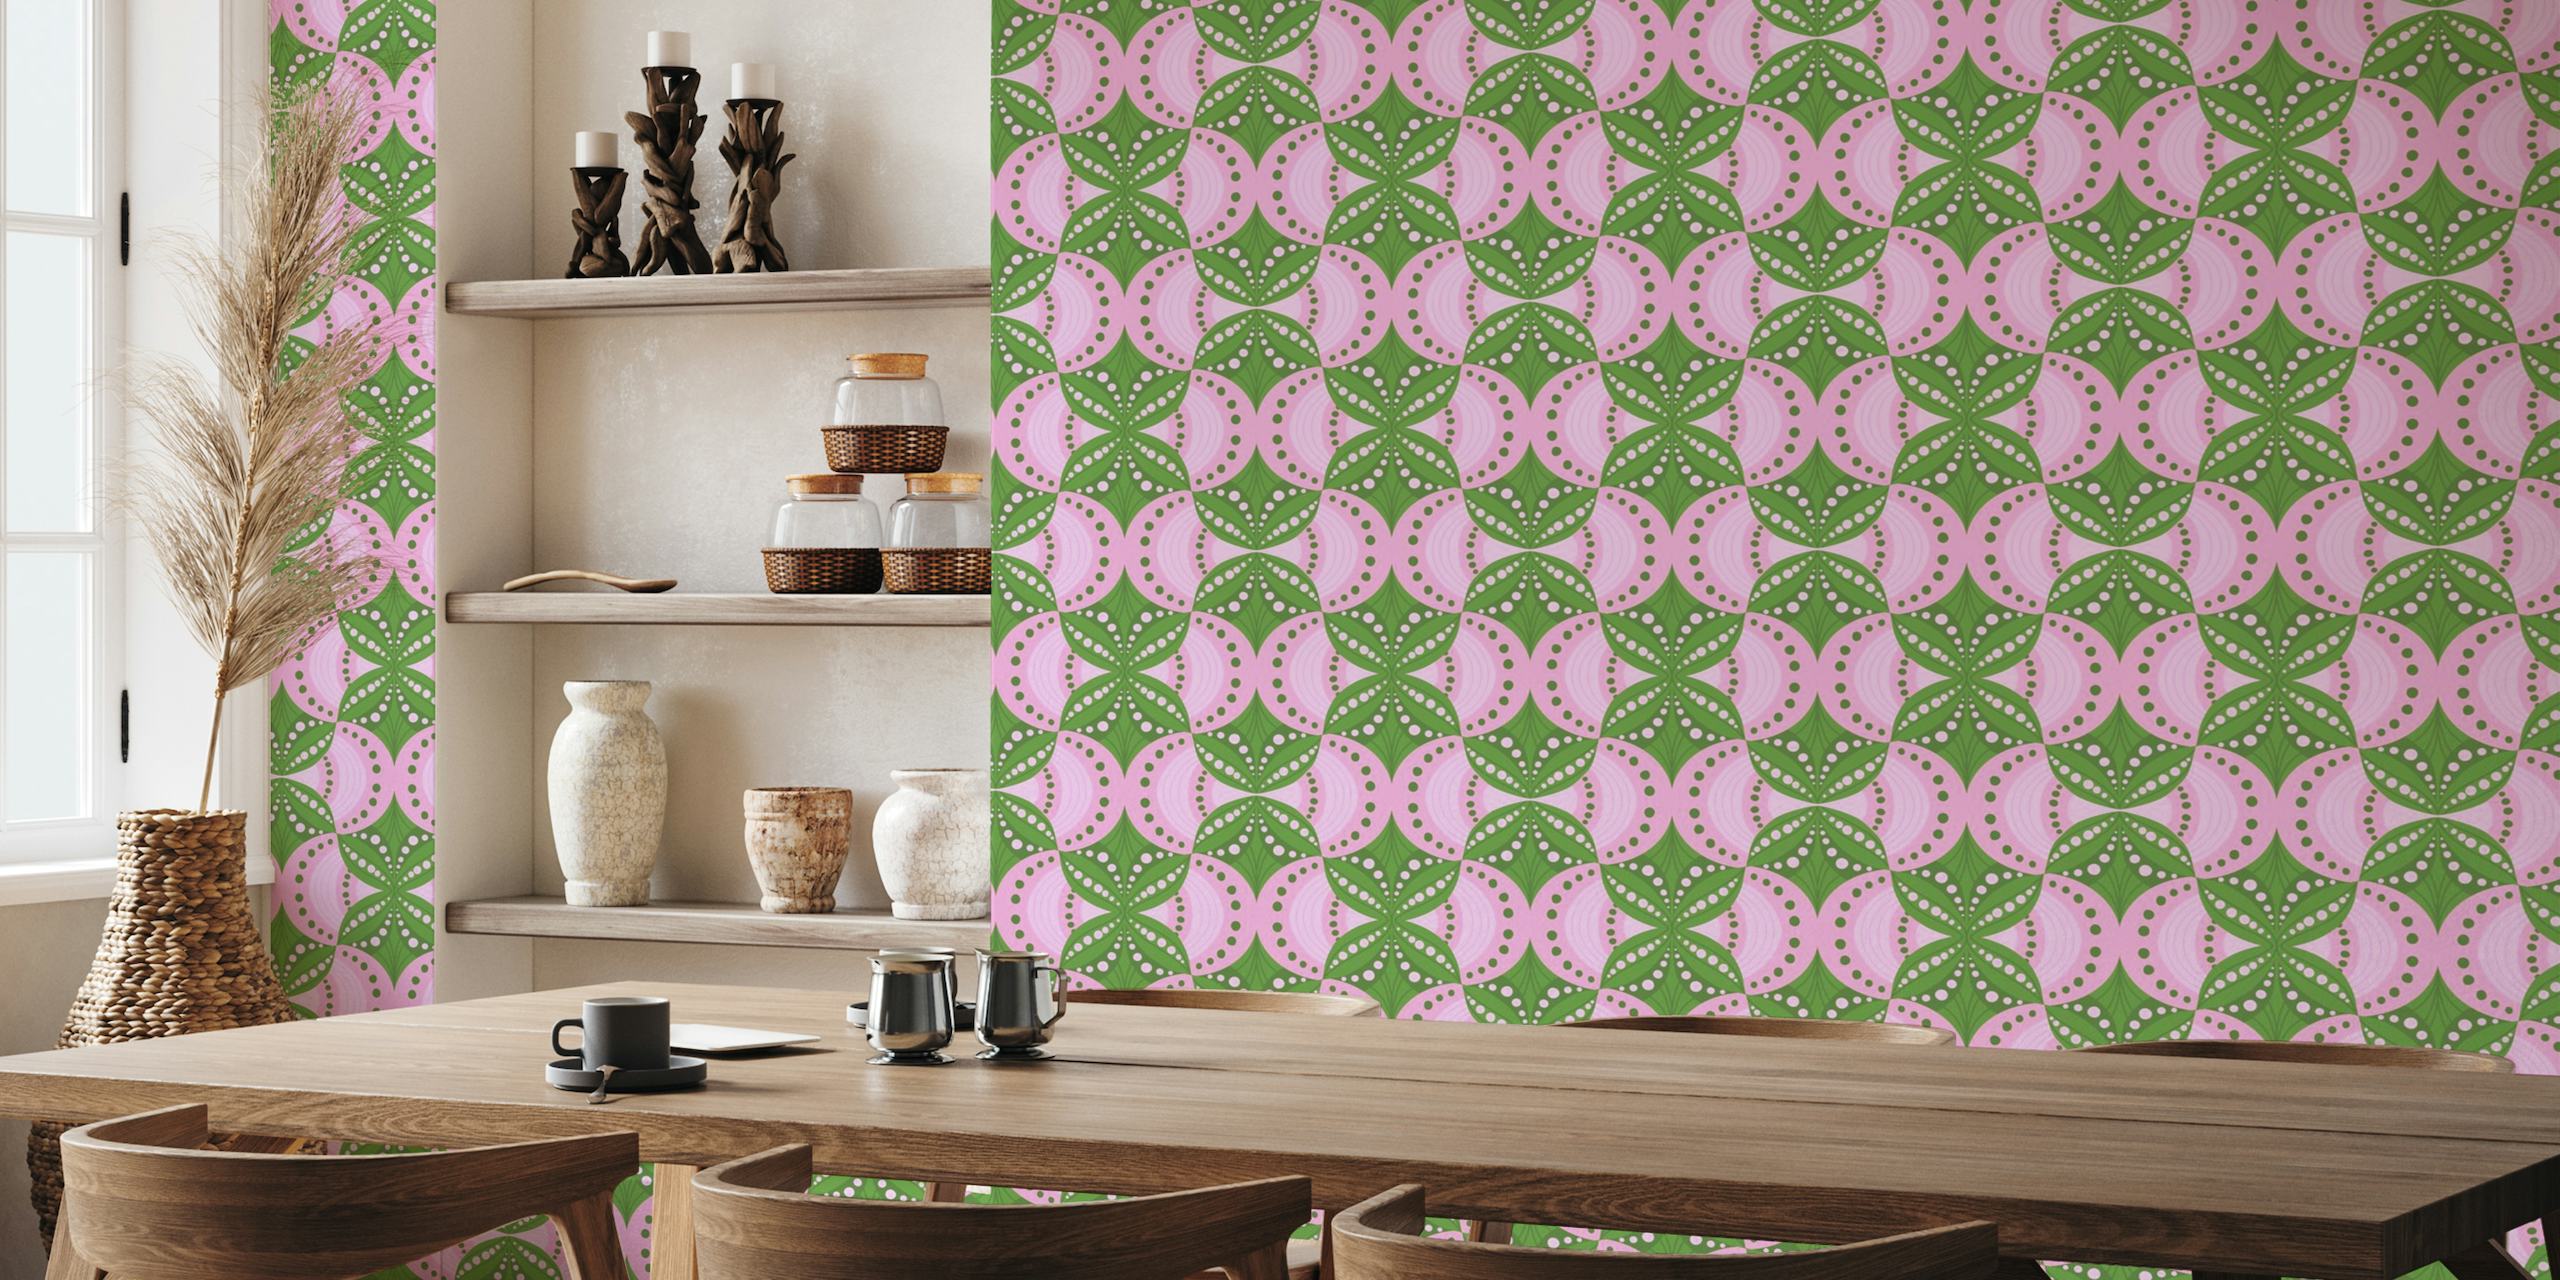 Green and pink geometric scallops wallpaper